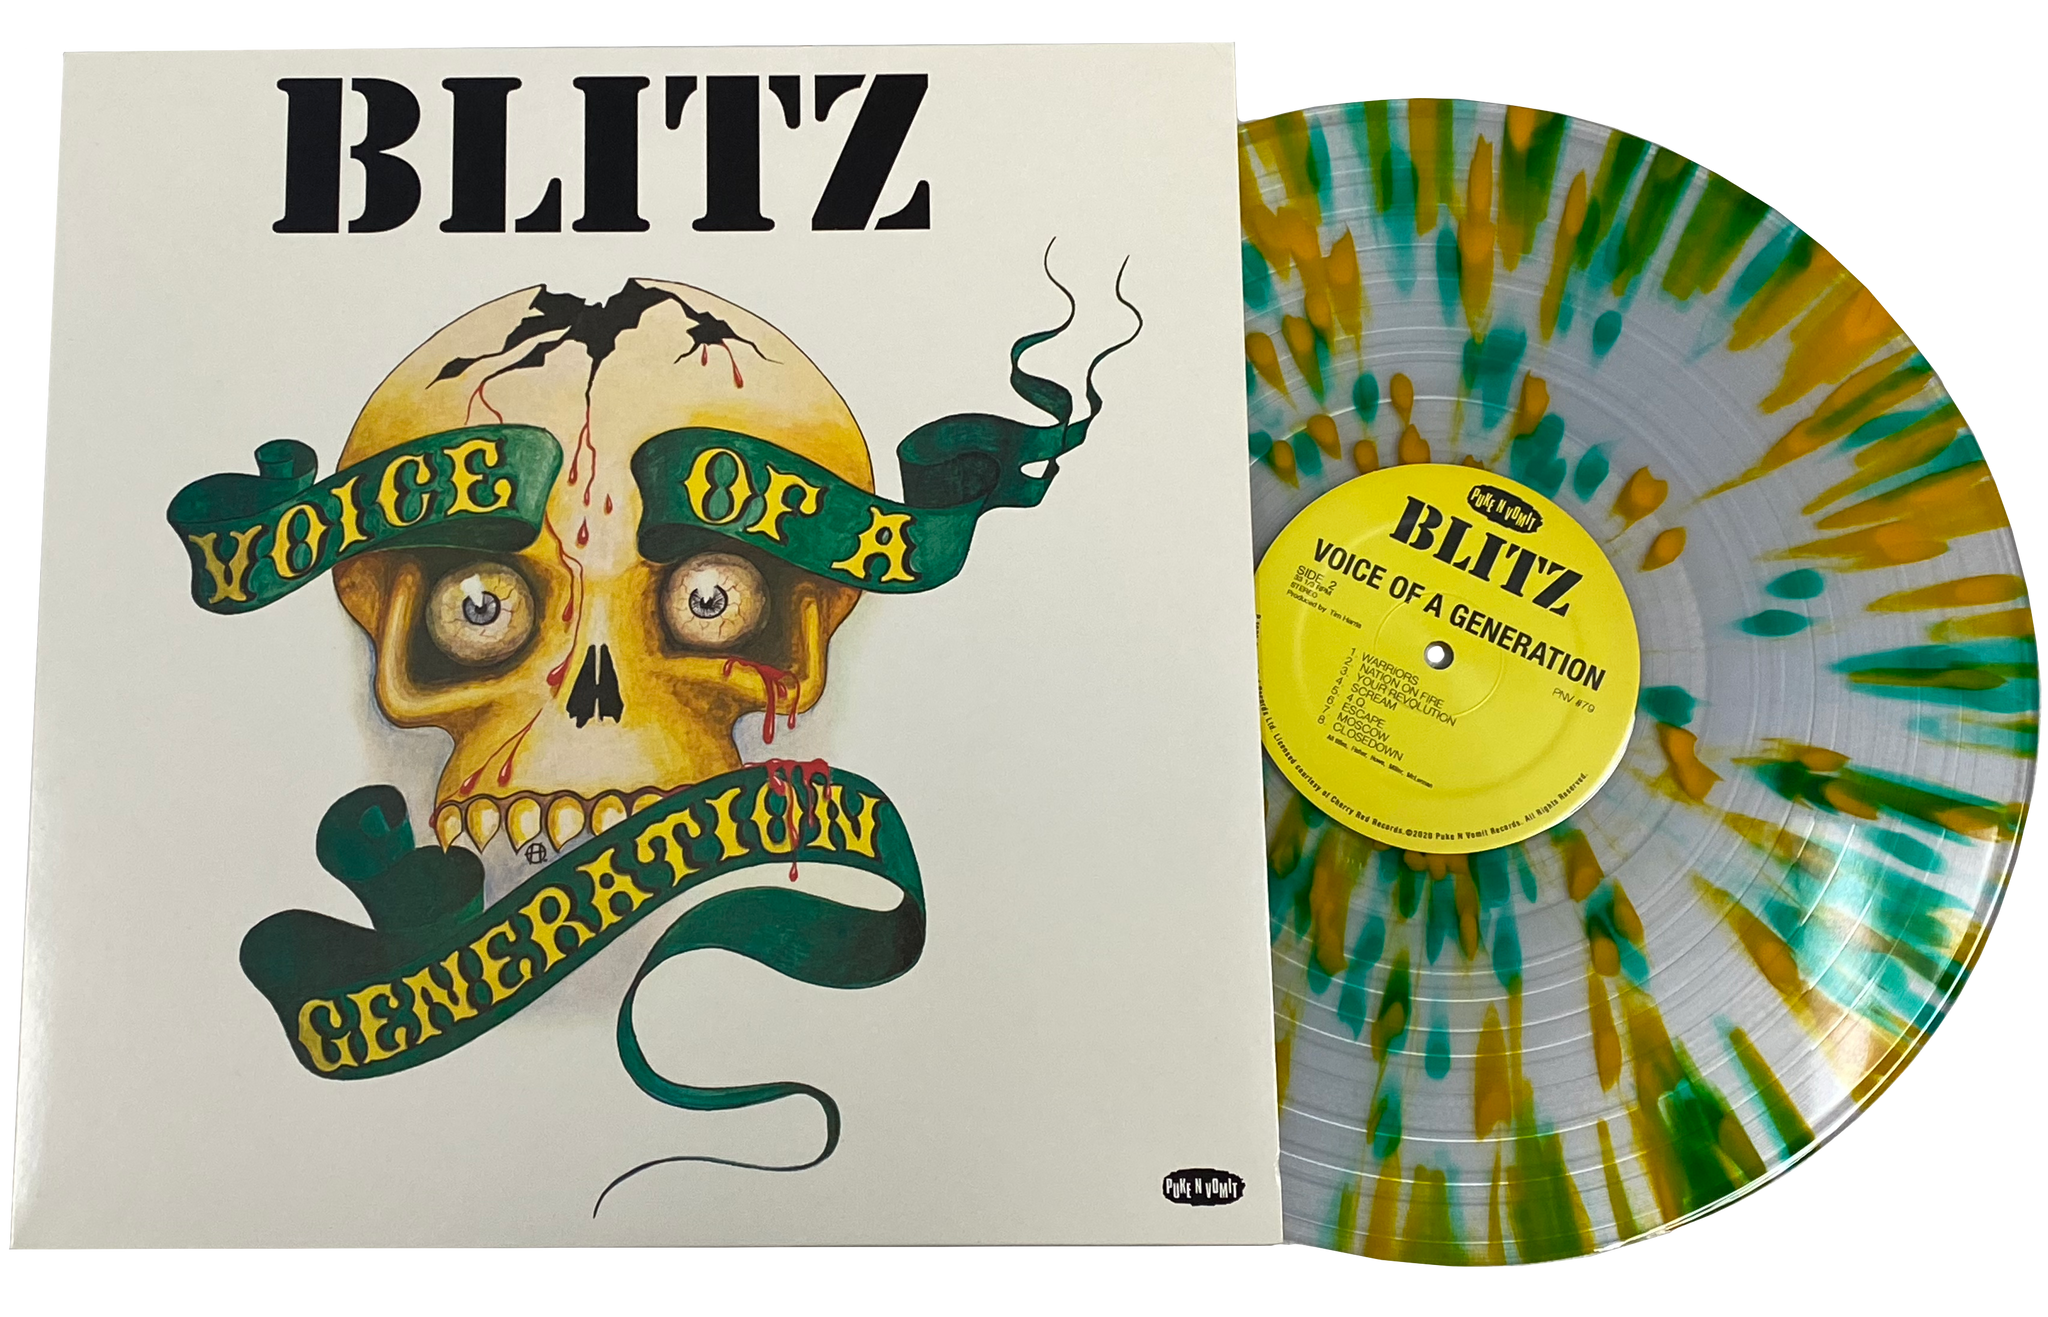 BLITZ "VOICE OF A GENERATION" SPLATTER VINYL LP